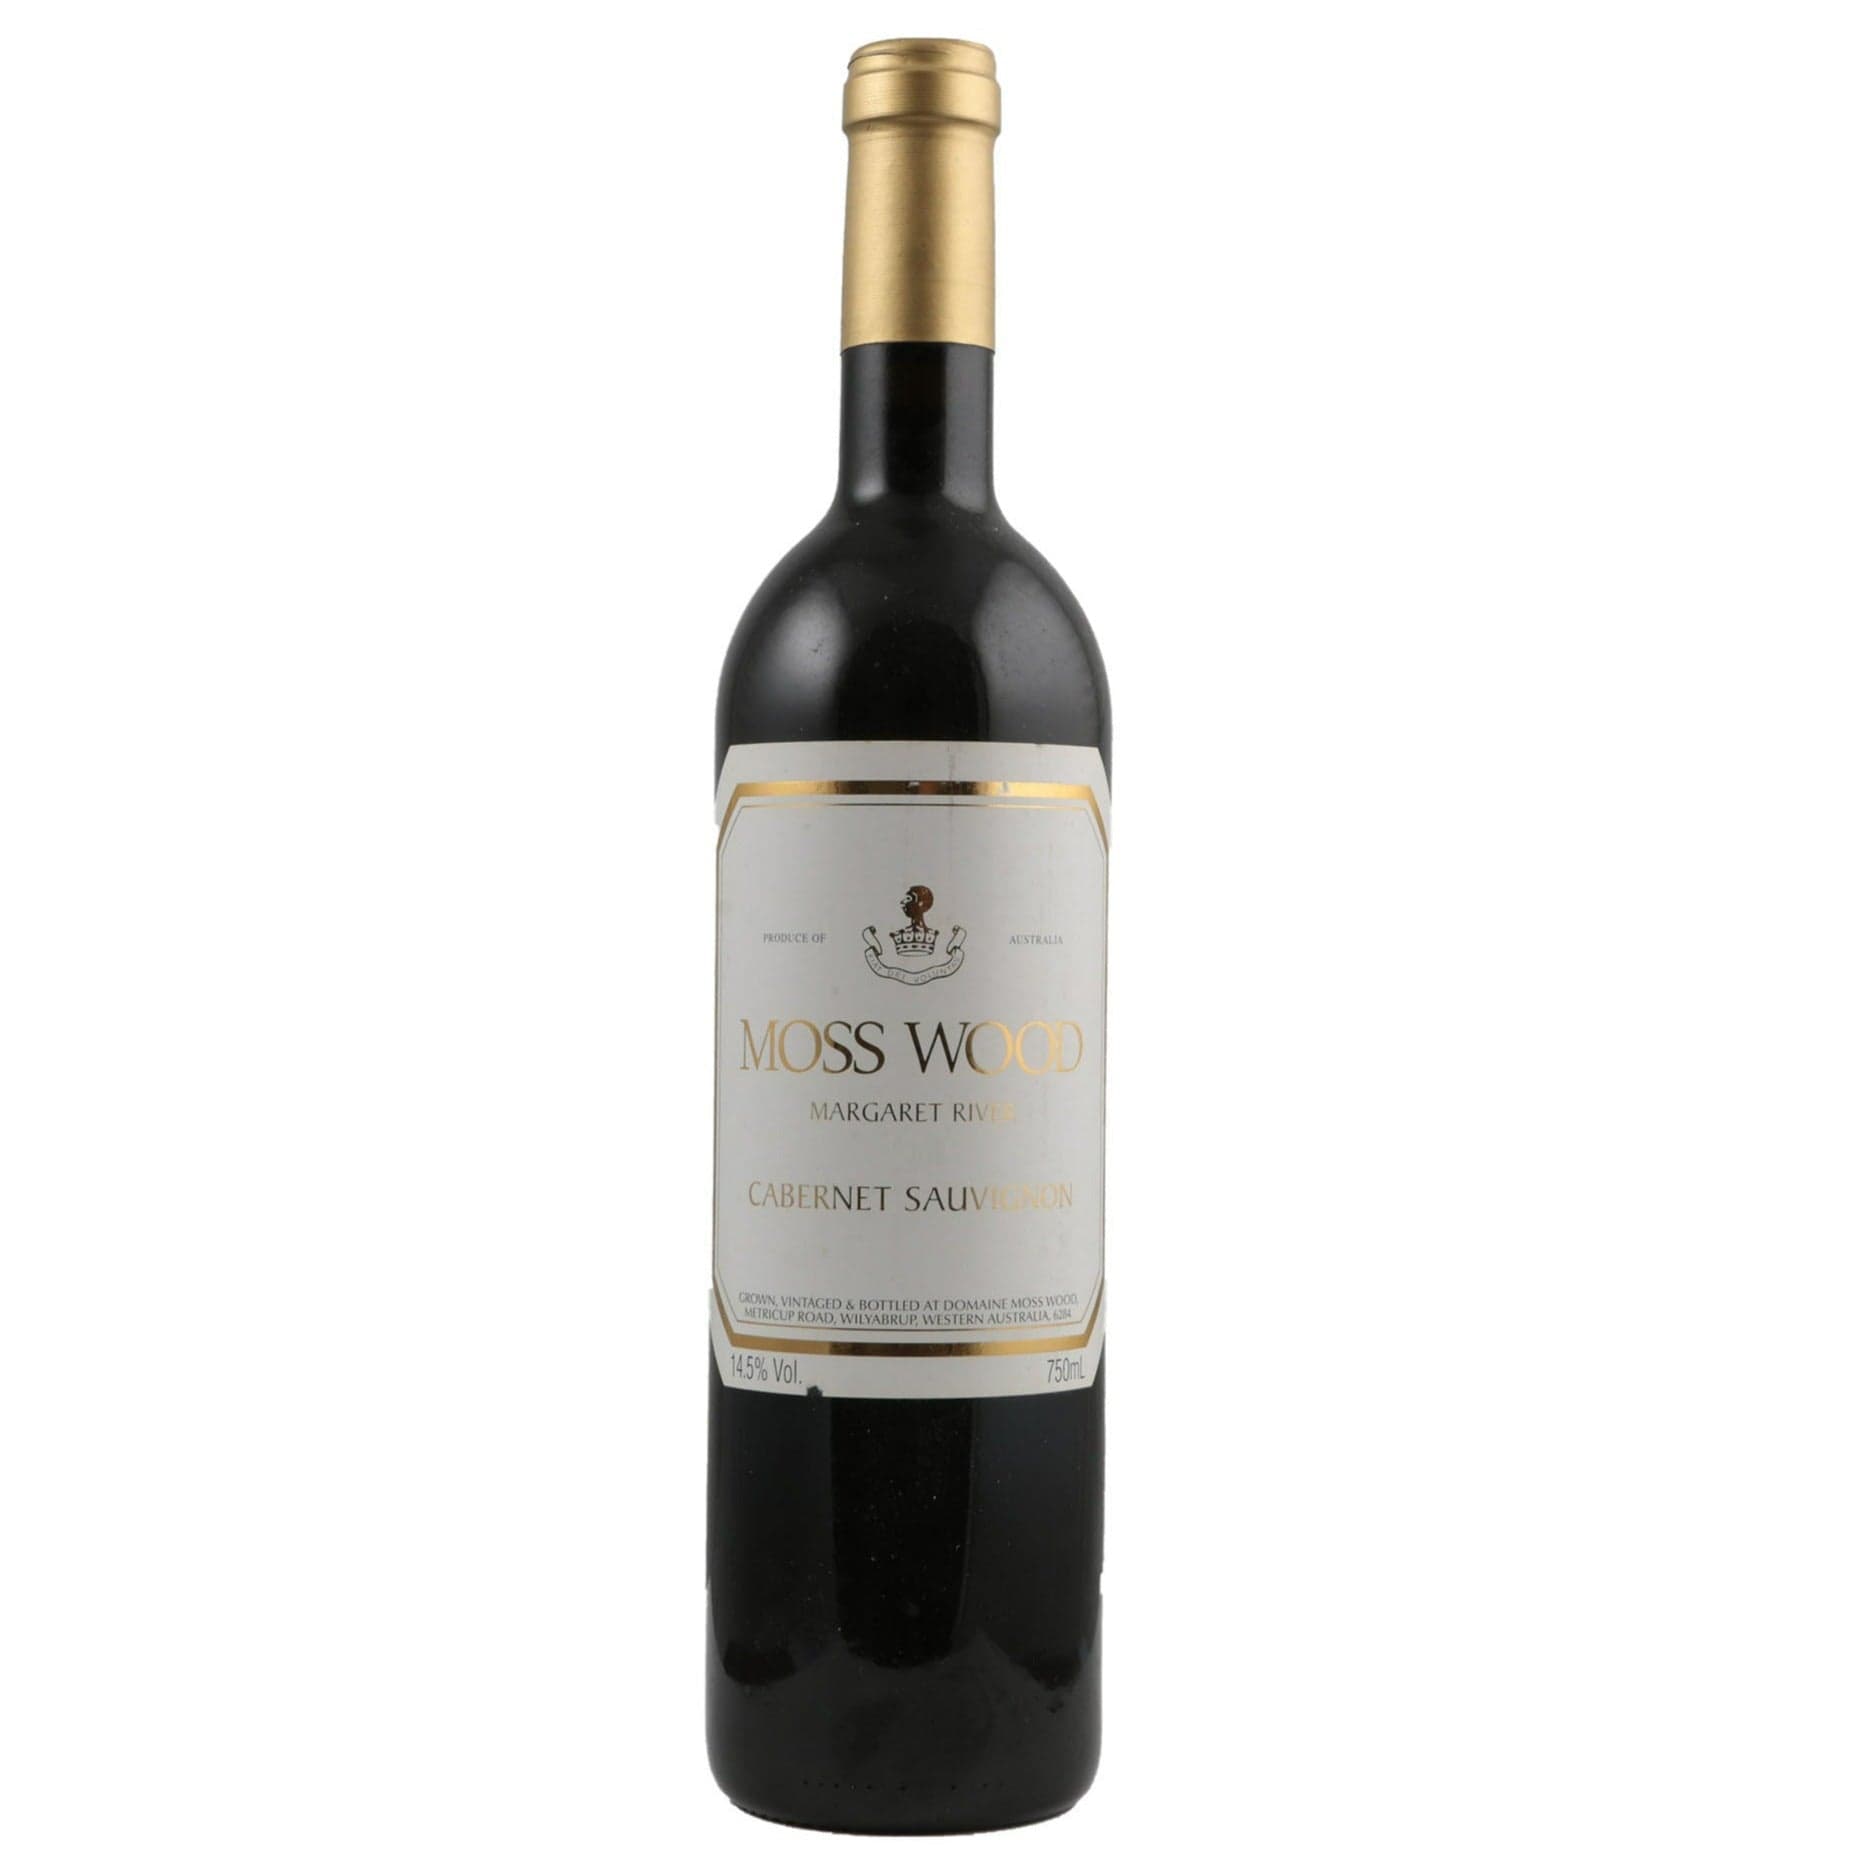 Single bottle of Red wine Moss Wood, Cabernet Sauvignon, Margaret River, 2014 92% Cabernet Sauvignon, 4% Cabernet Franc & 4% Petit Verdot